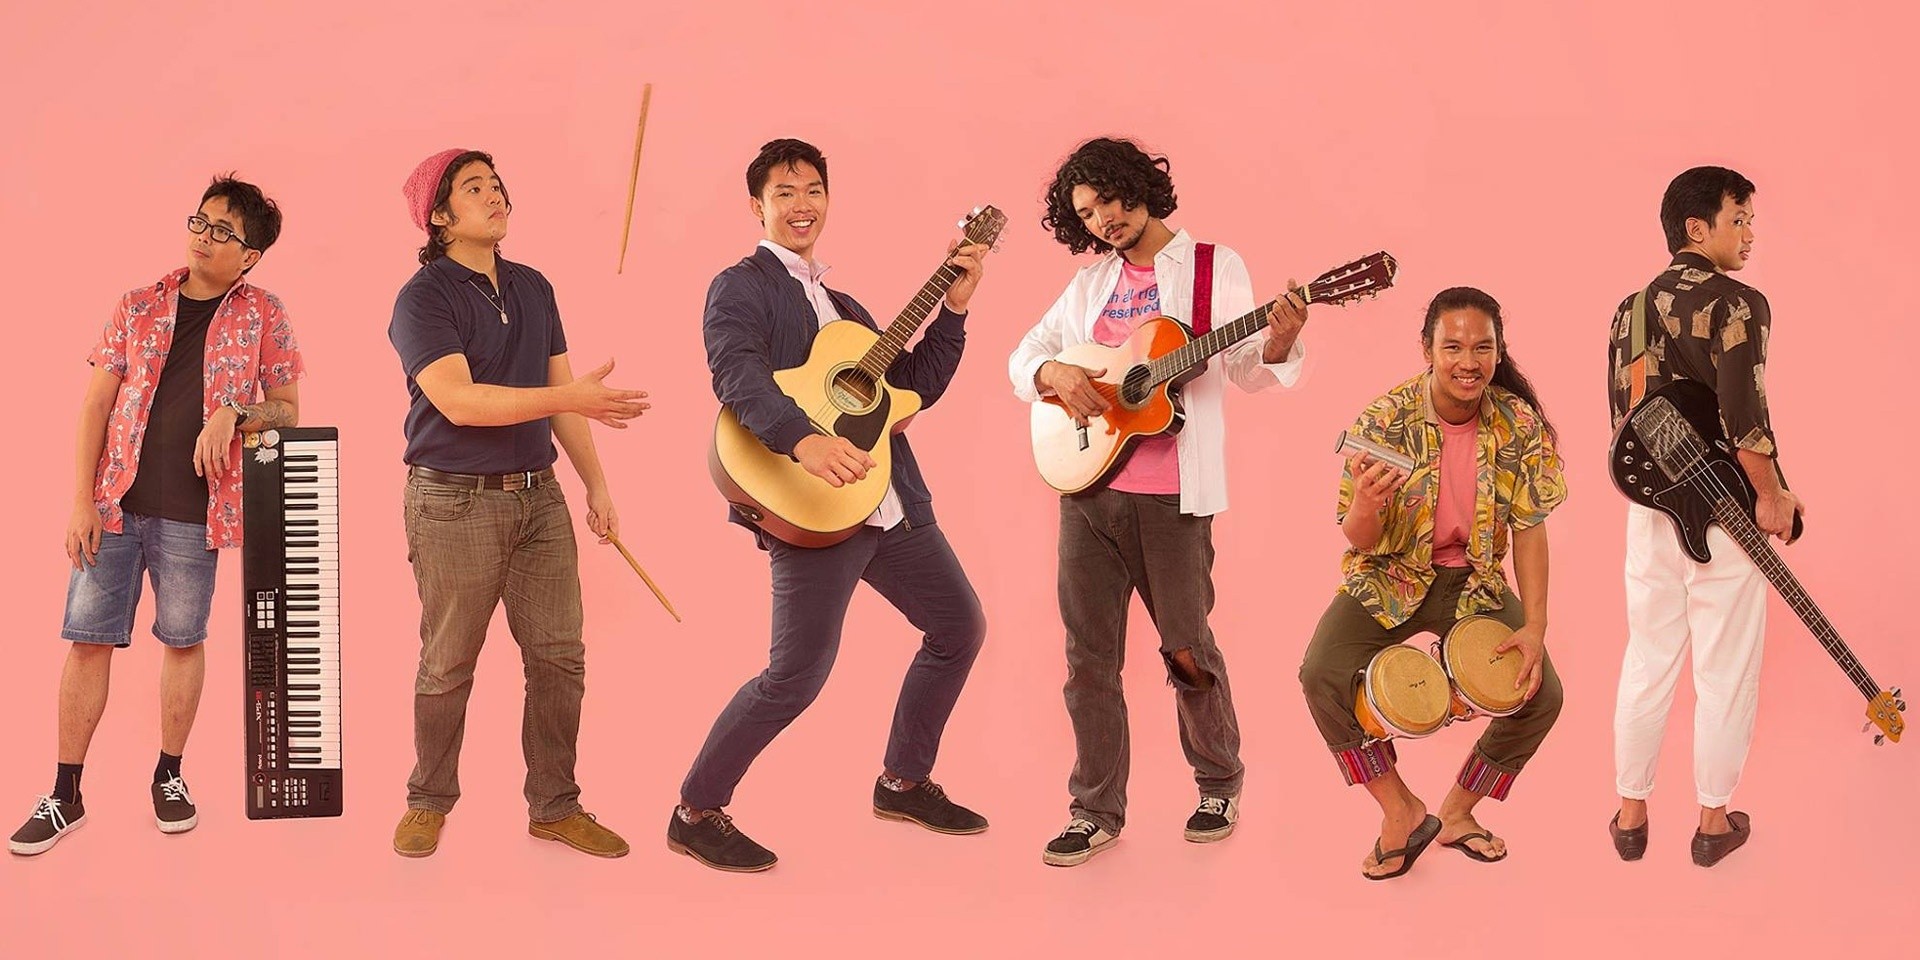 Pinkmen unveil double single release 'Your Name' and 'Hanggang Sa Muli' – listen